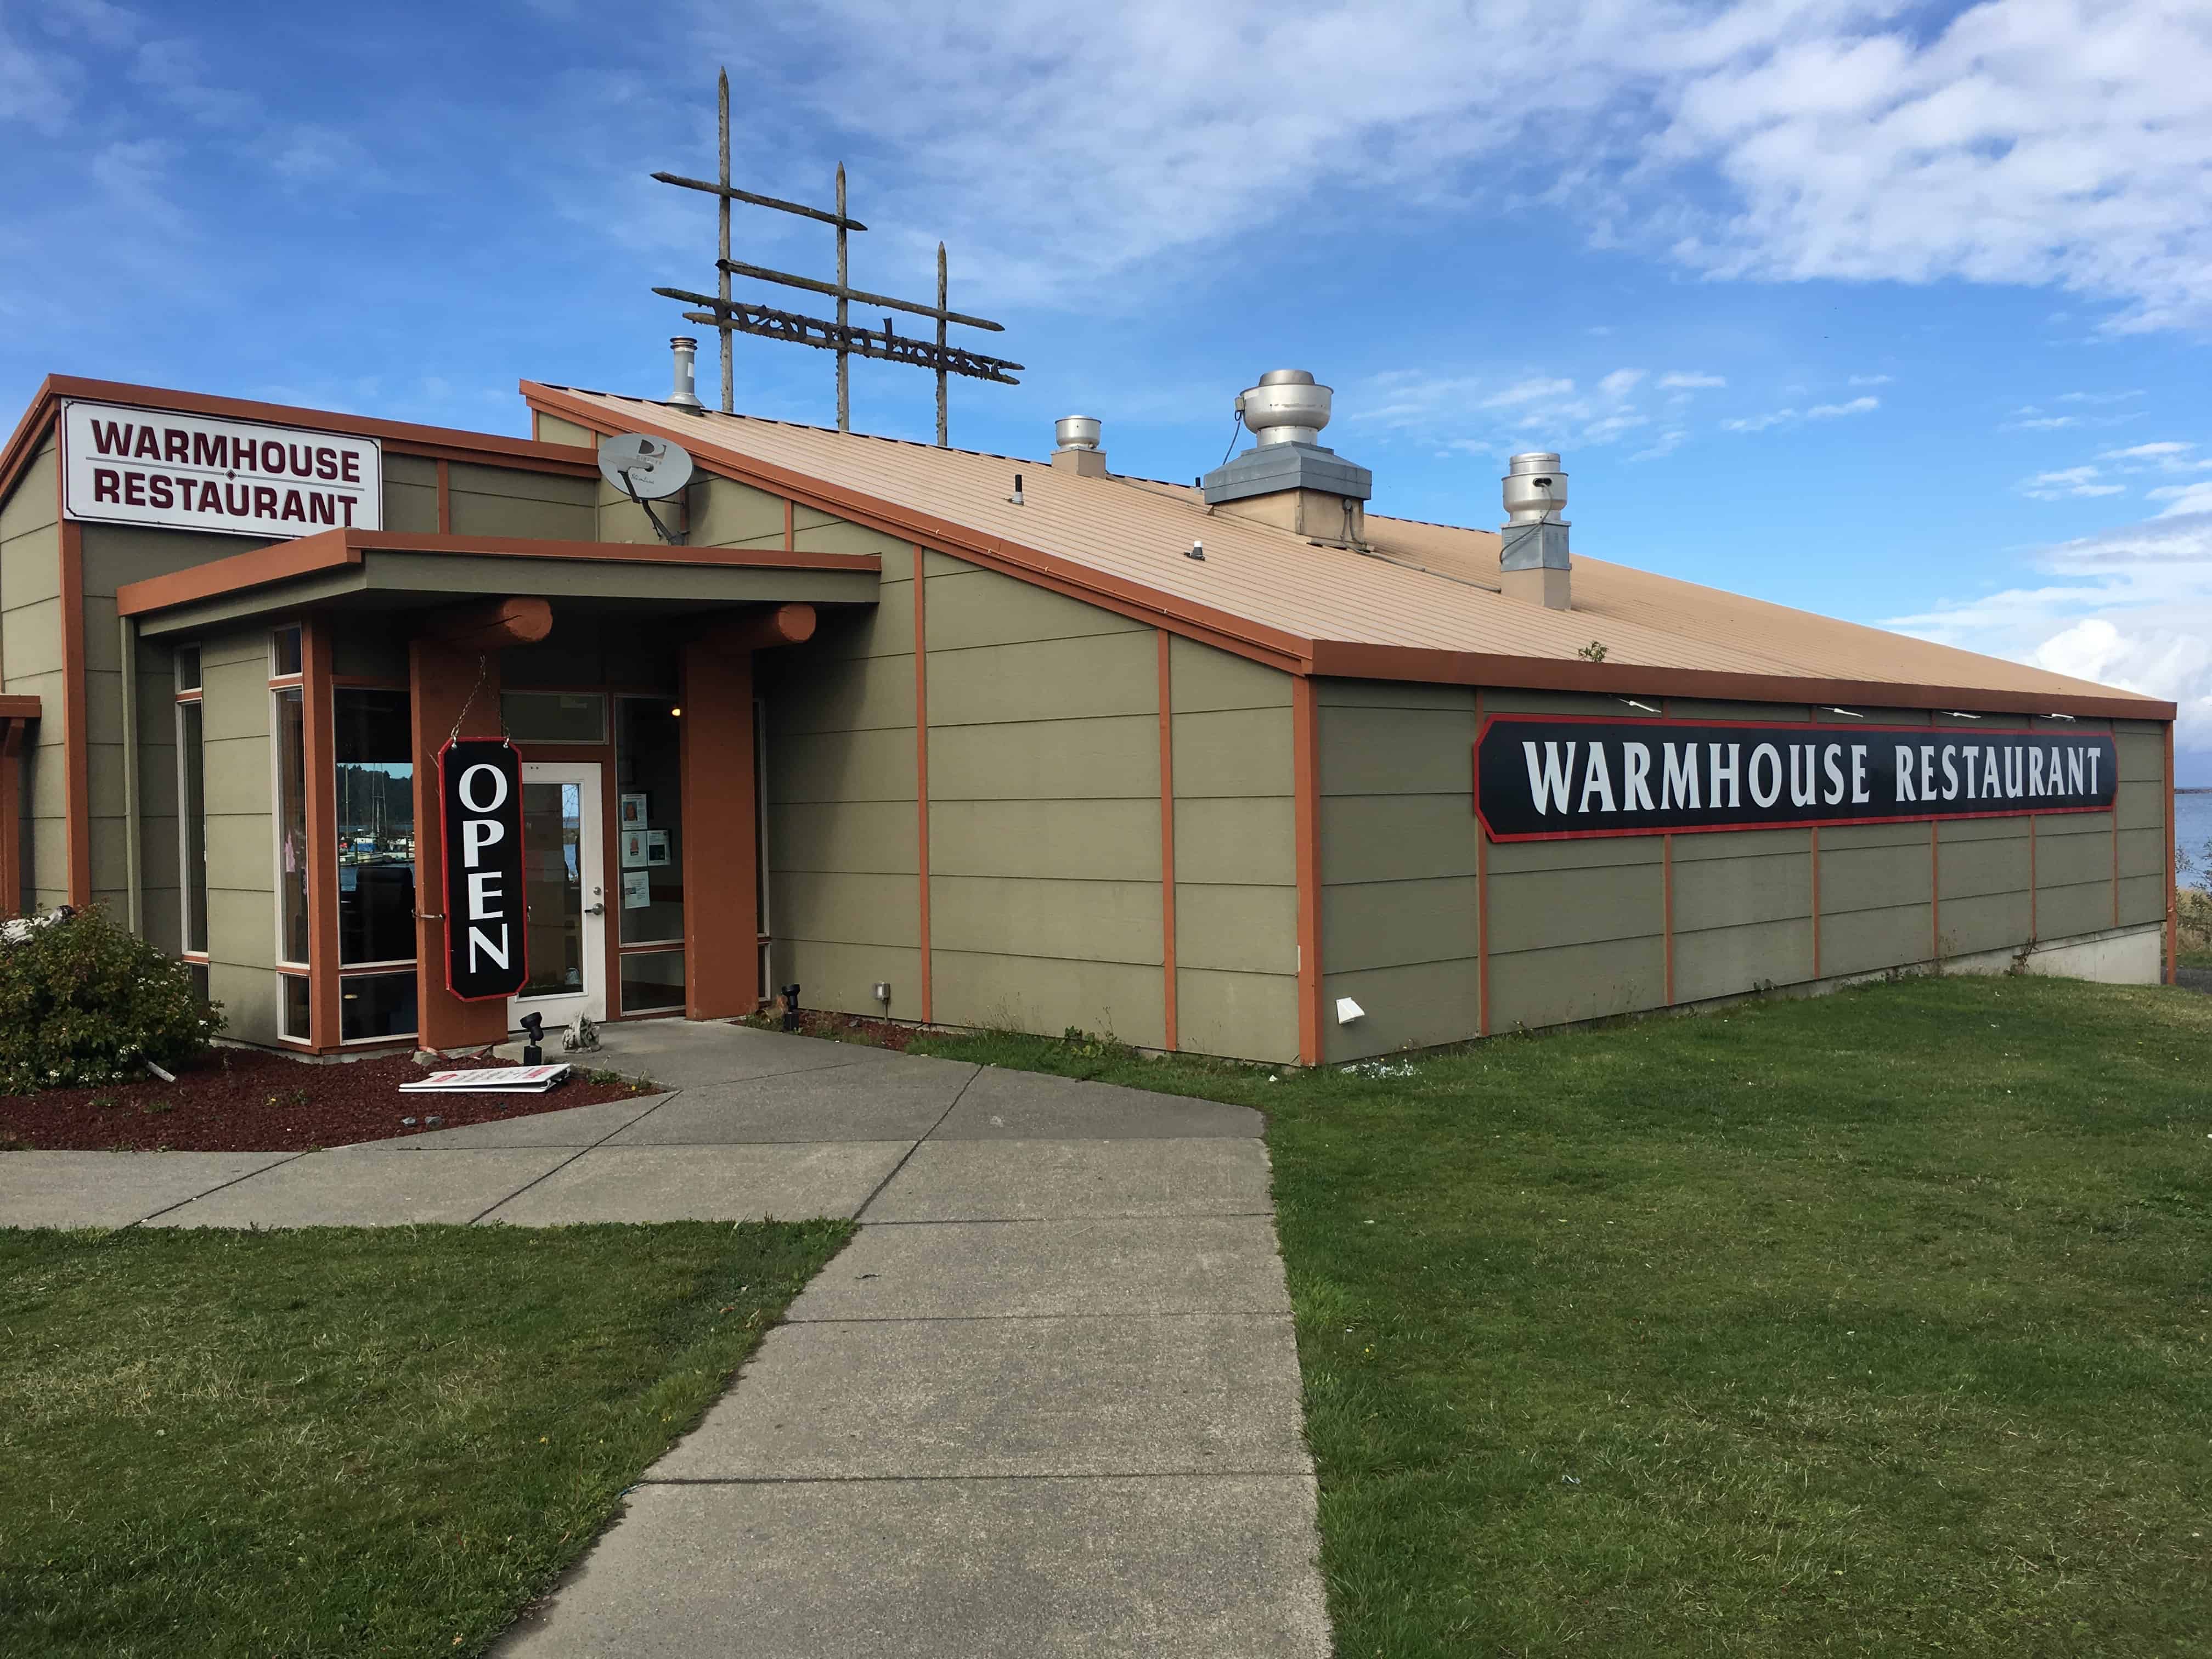 Warmhouse Restaurant in Neah Bay, Makah Reservation, Washington